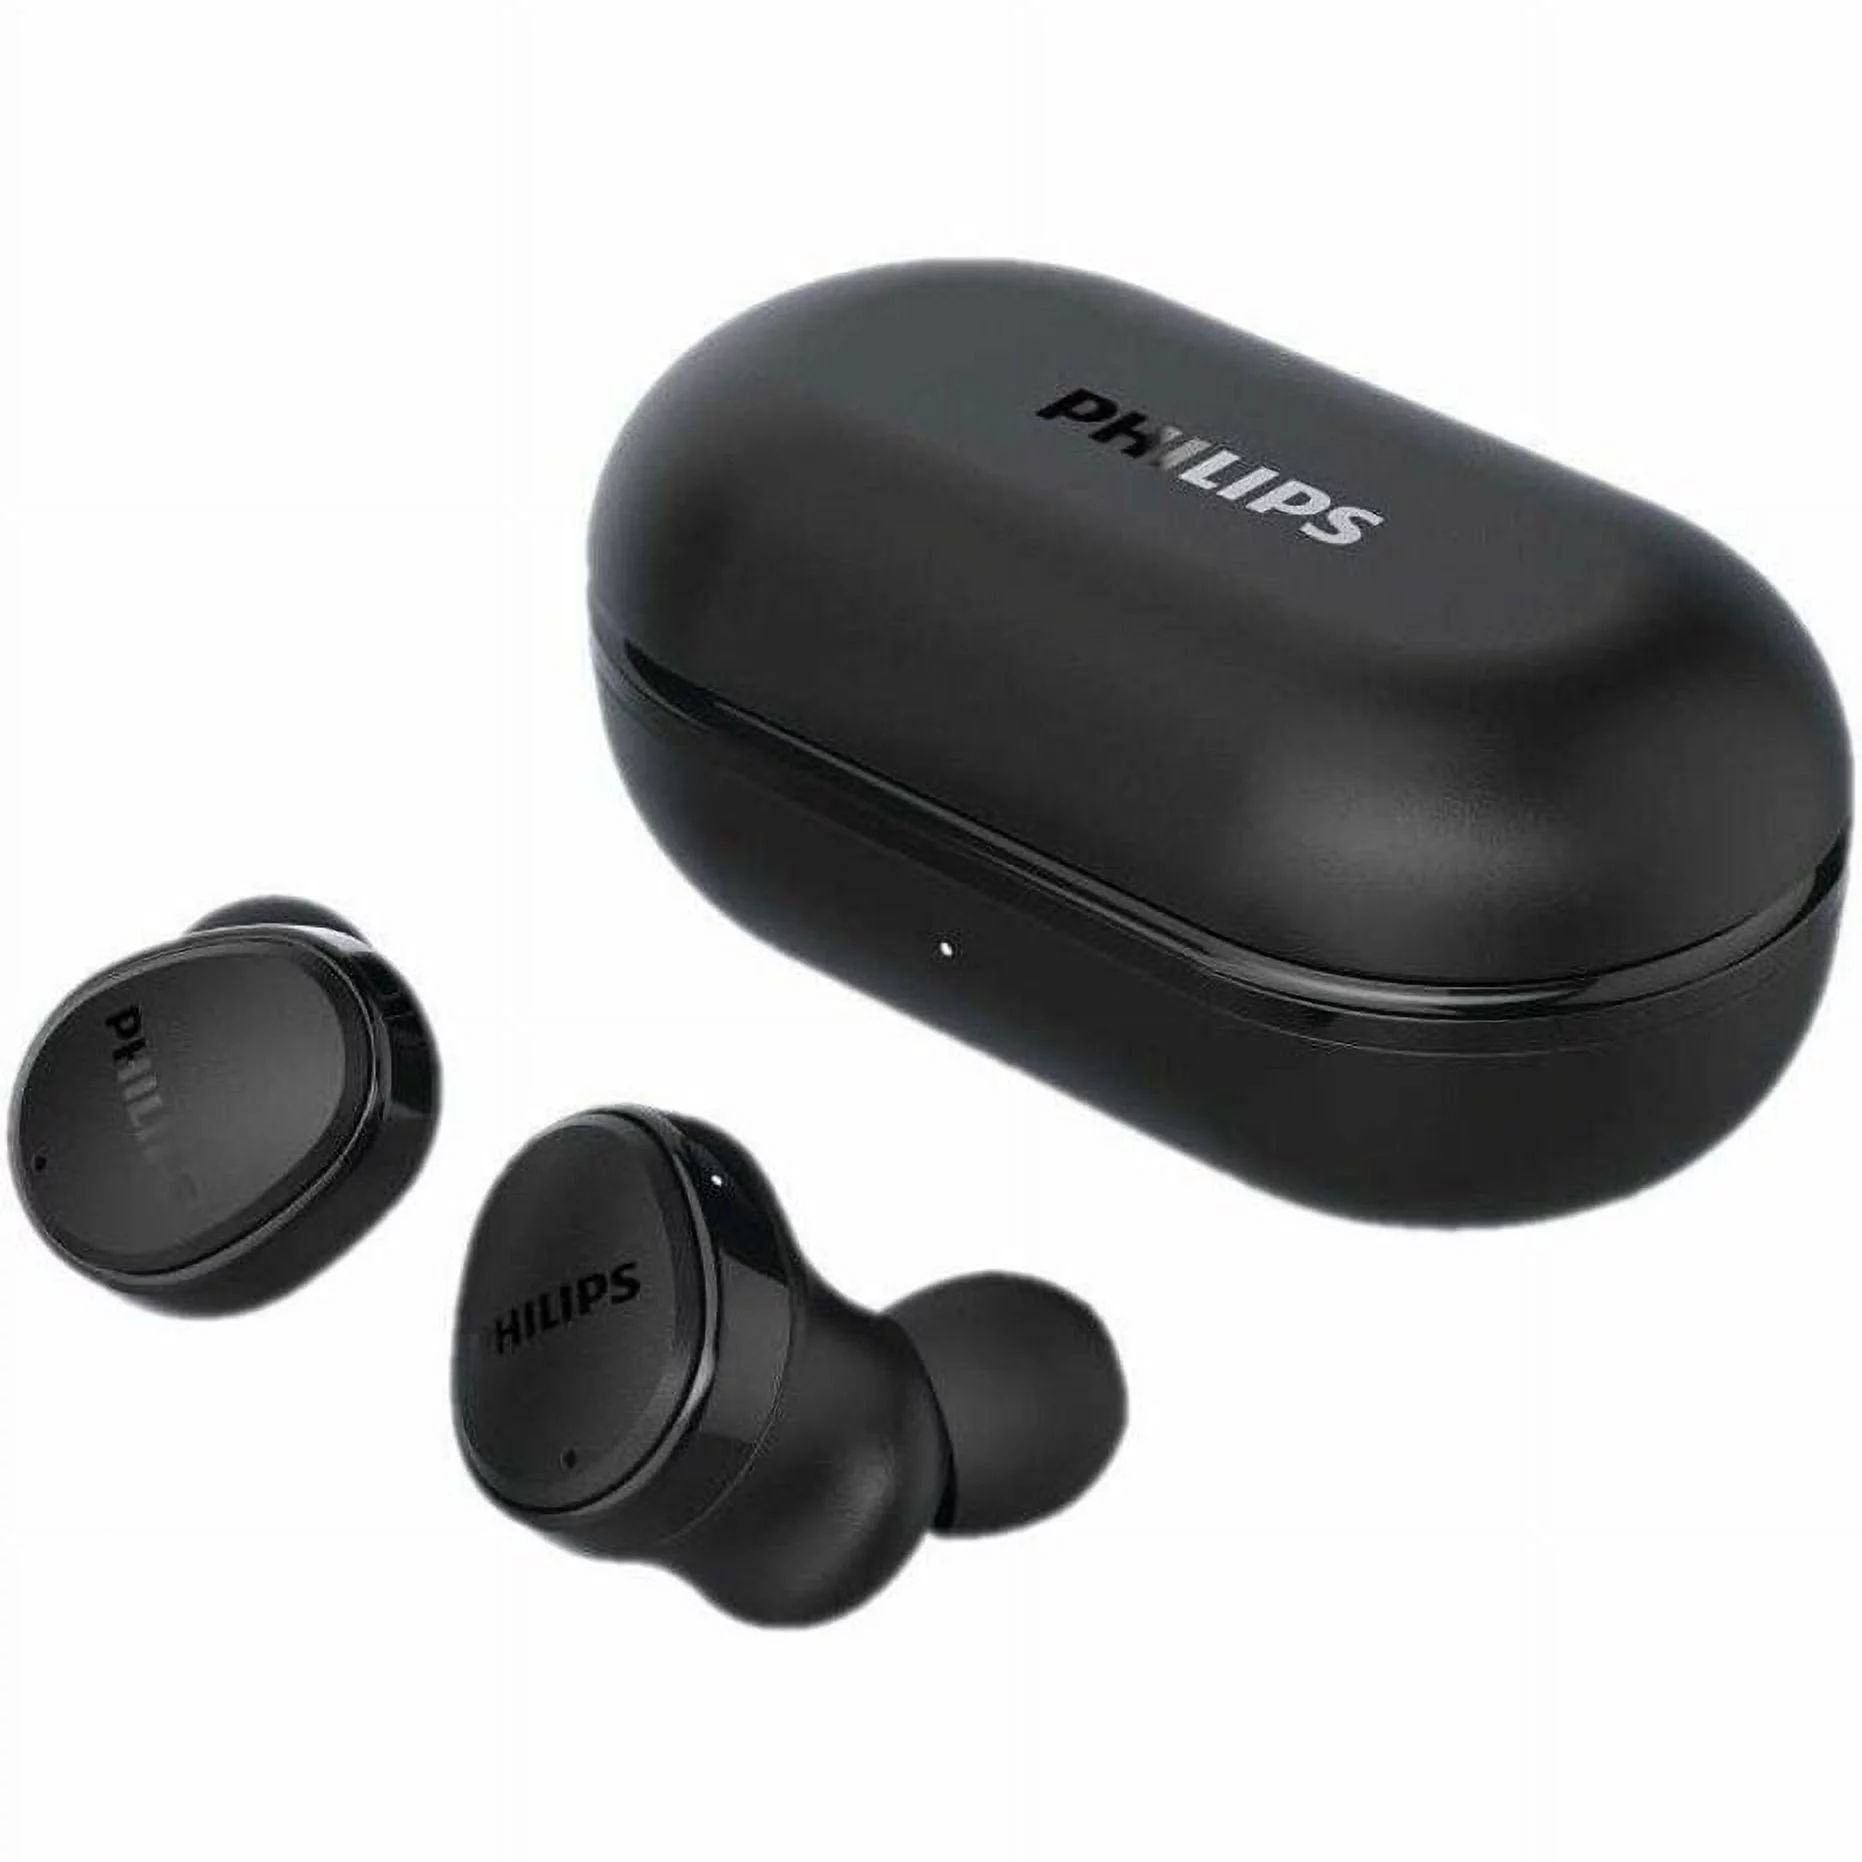 Philips T4556 True Wireless Headphones with ANC, Black | Walmart (US)